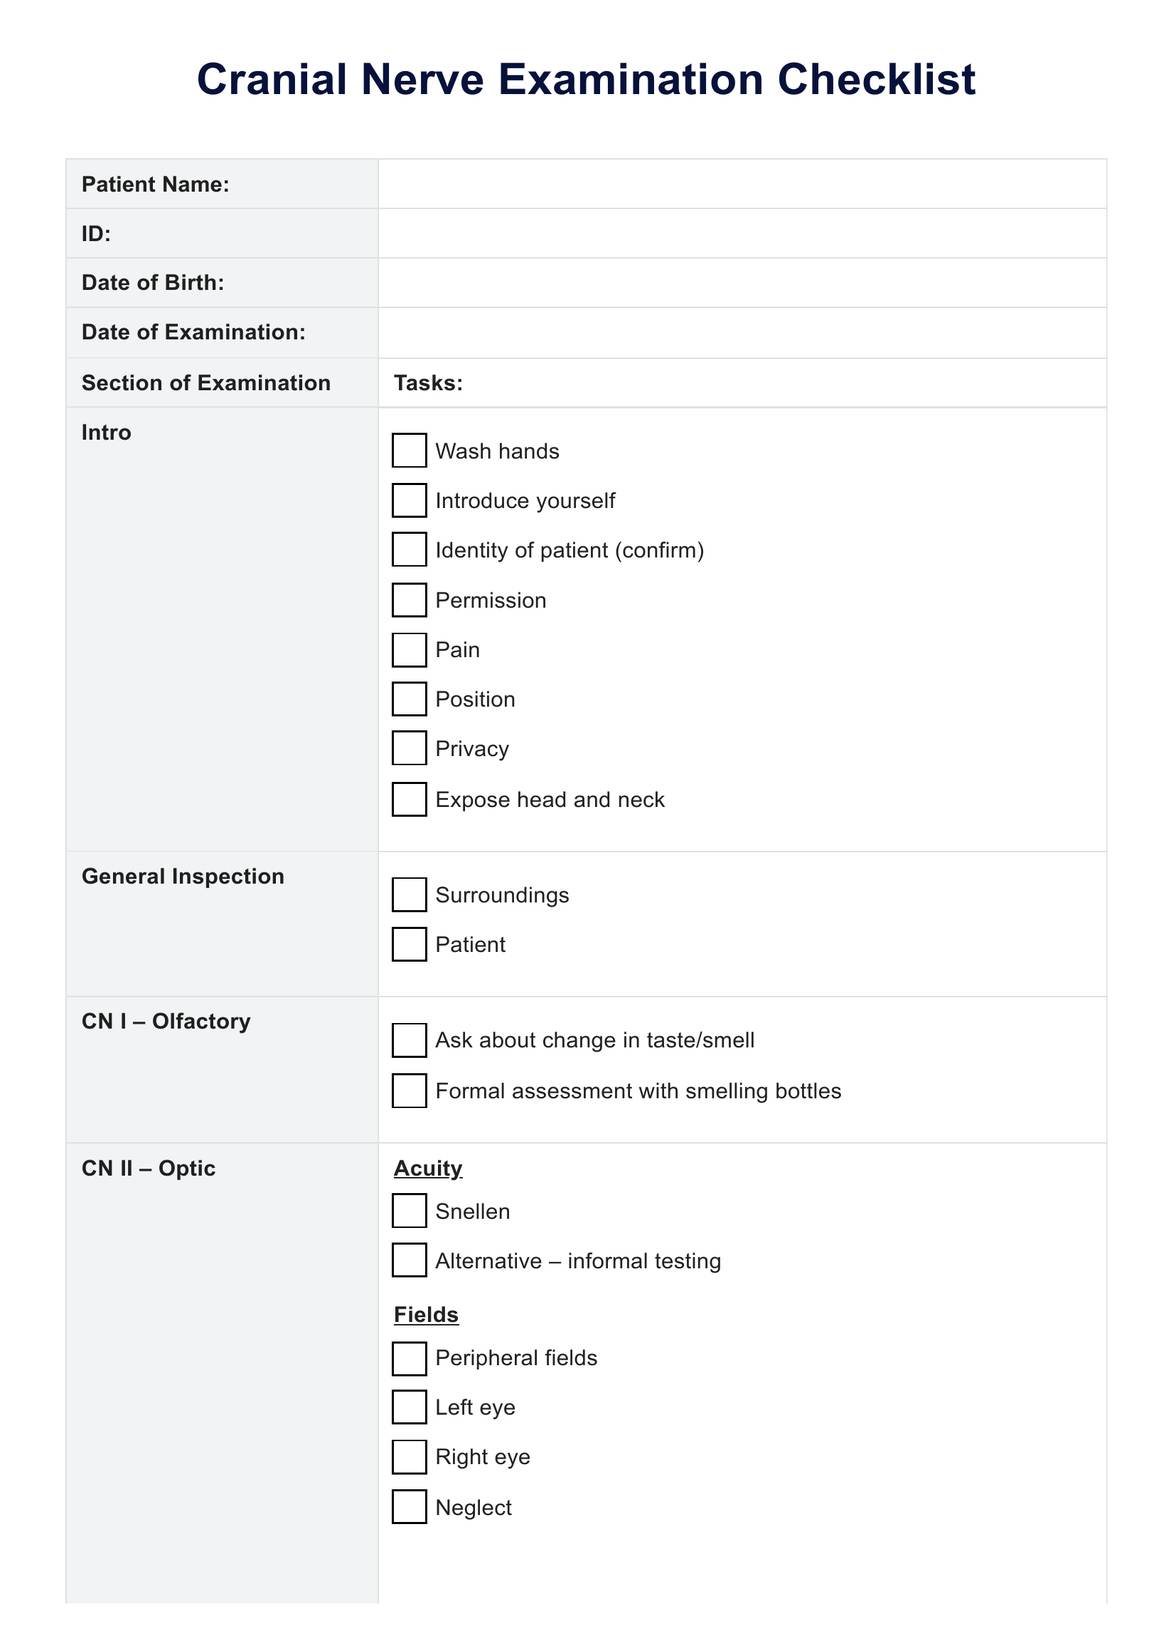 Cranial Nerve Examination Checklist PDF Example